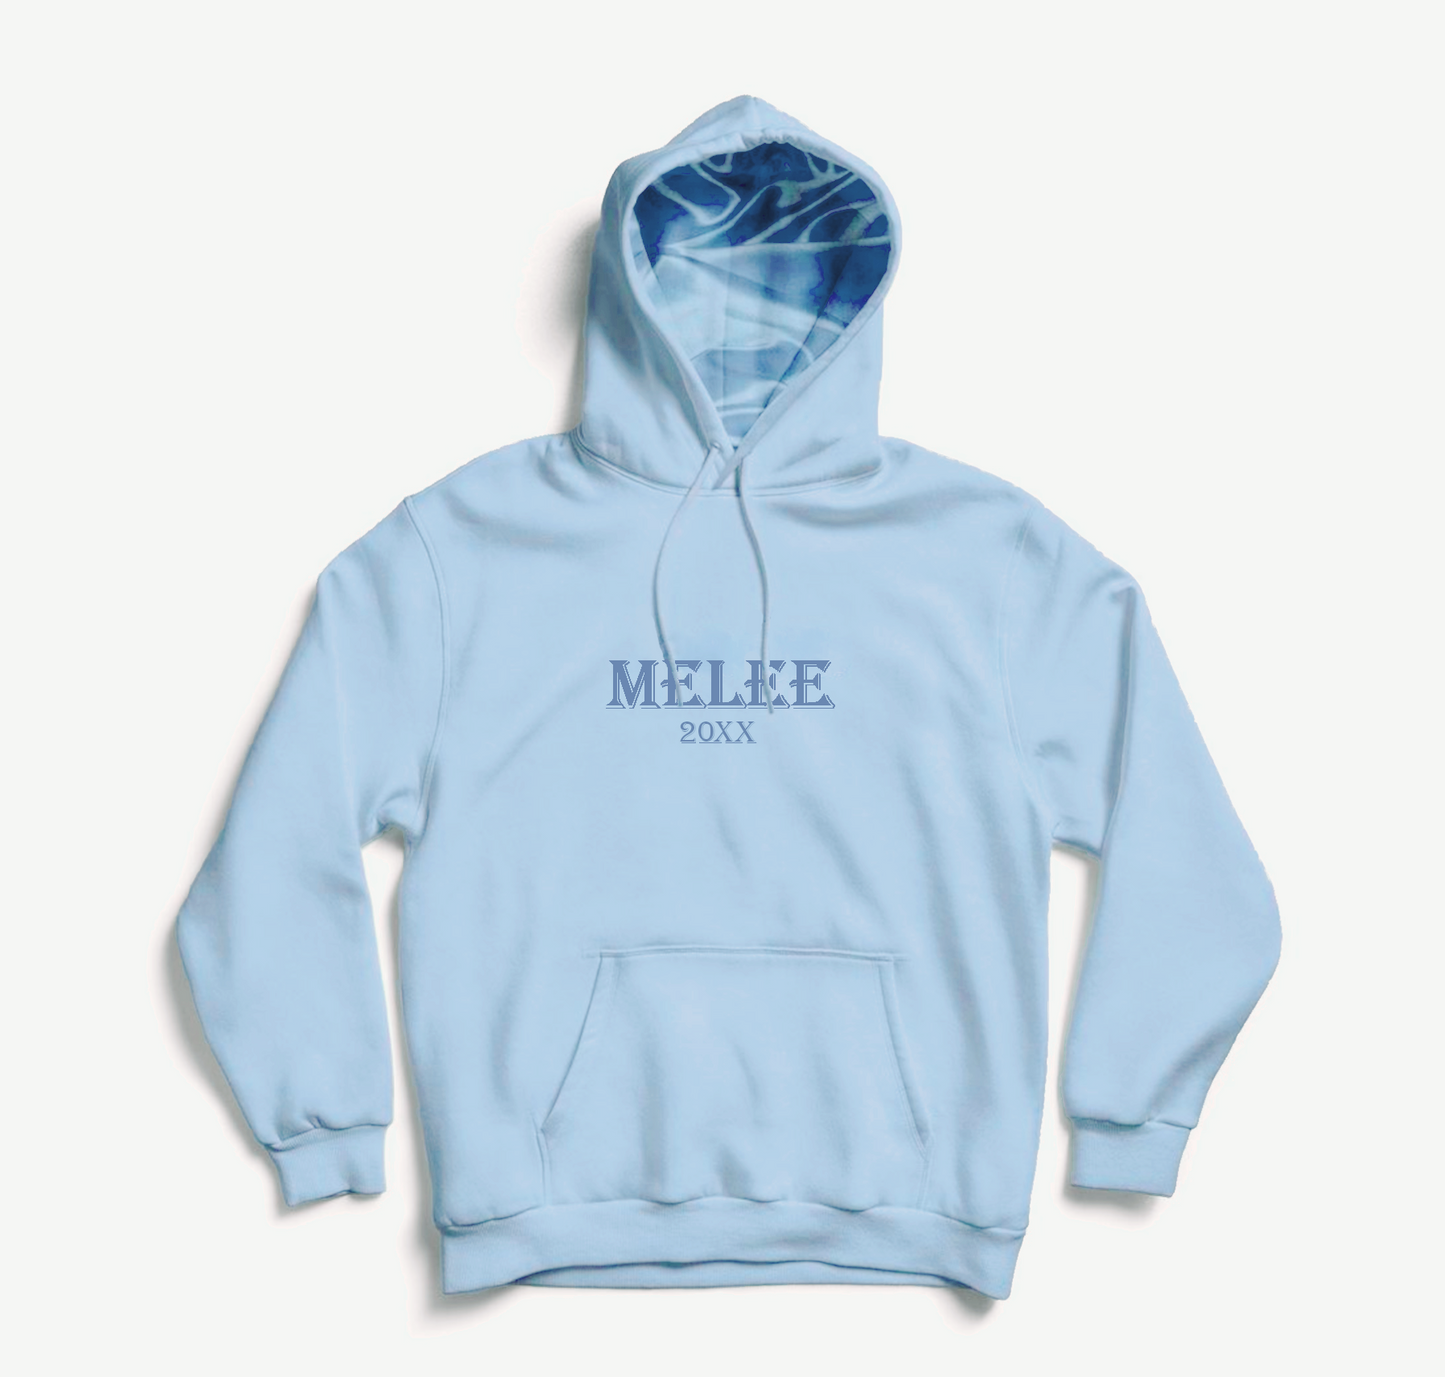 Melee 20XX Silk Hoodie - Light Blue